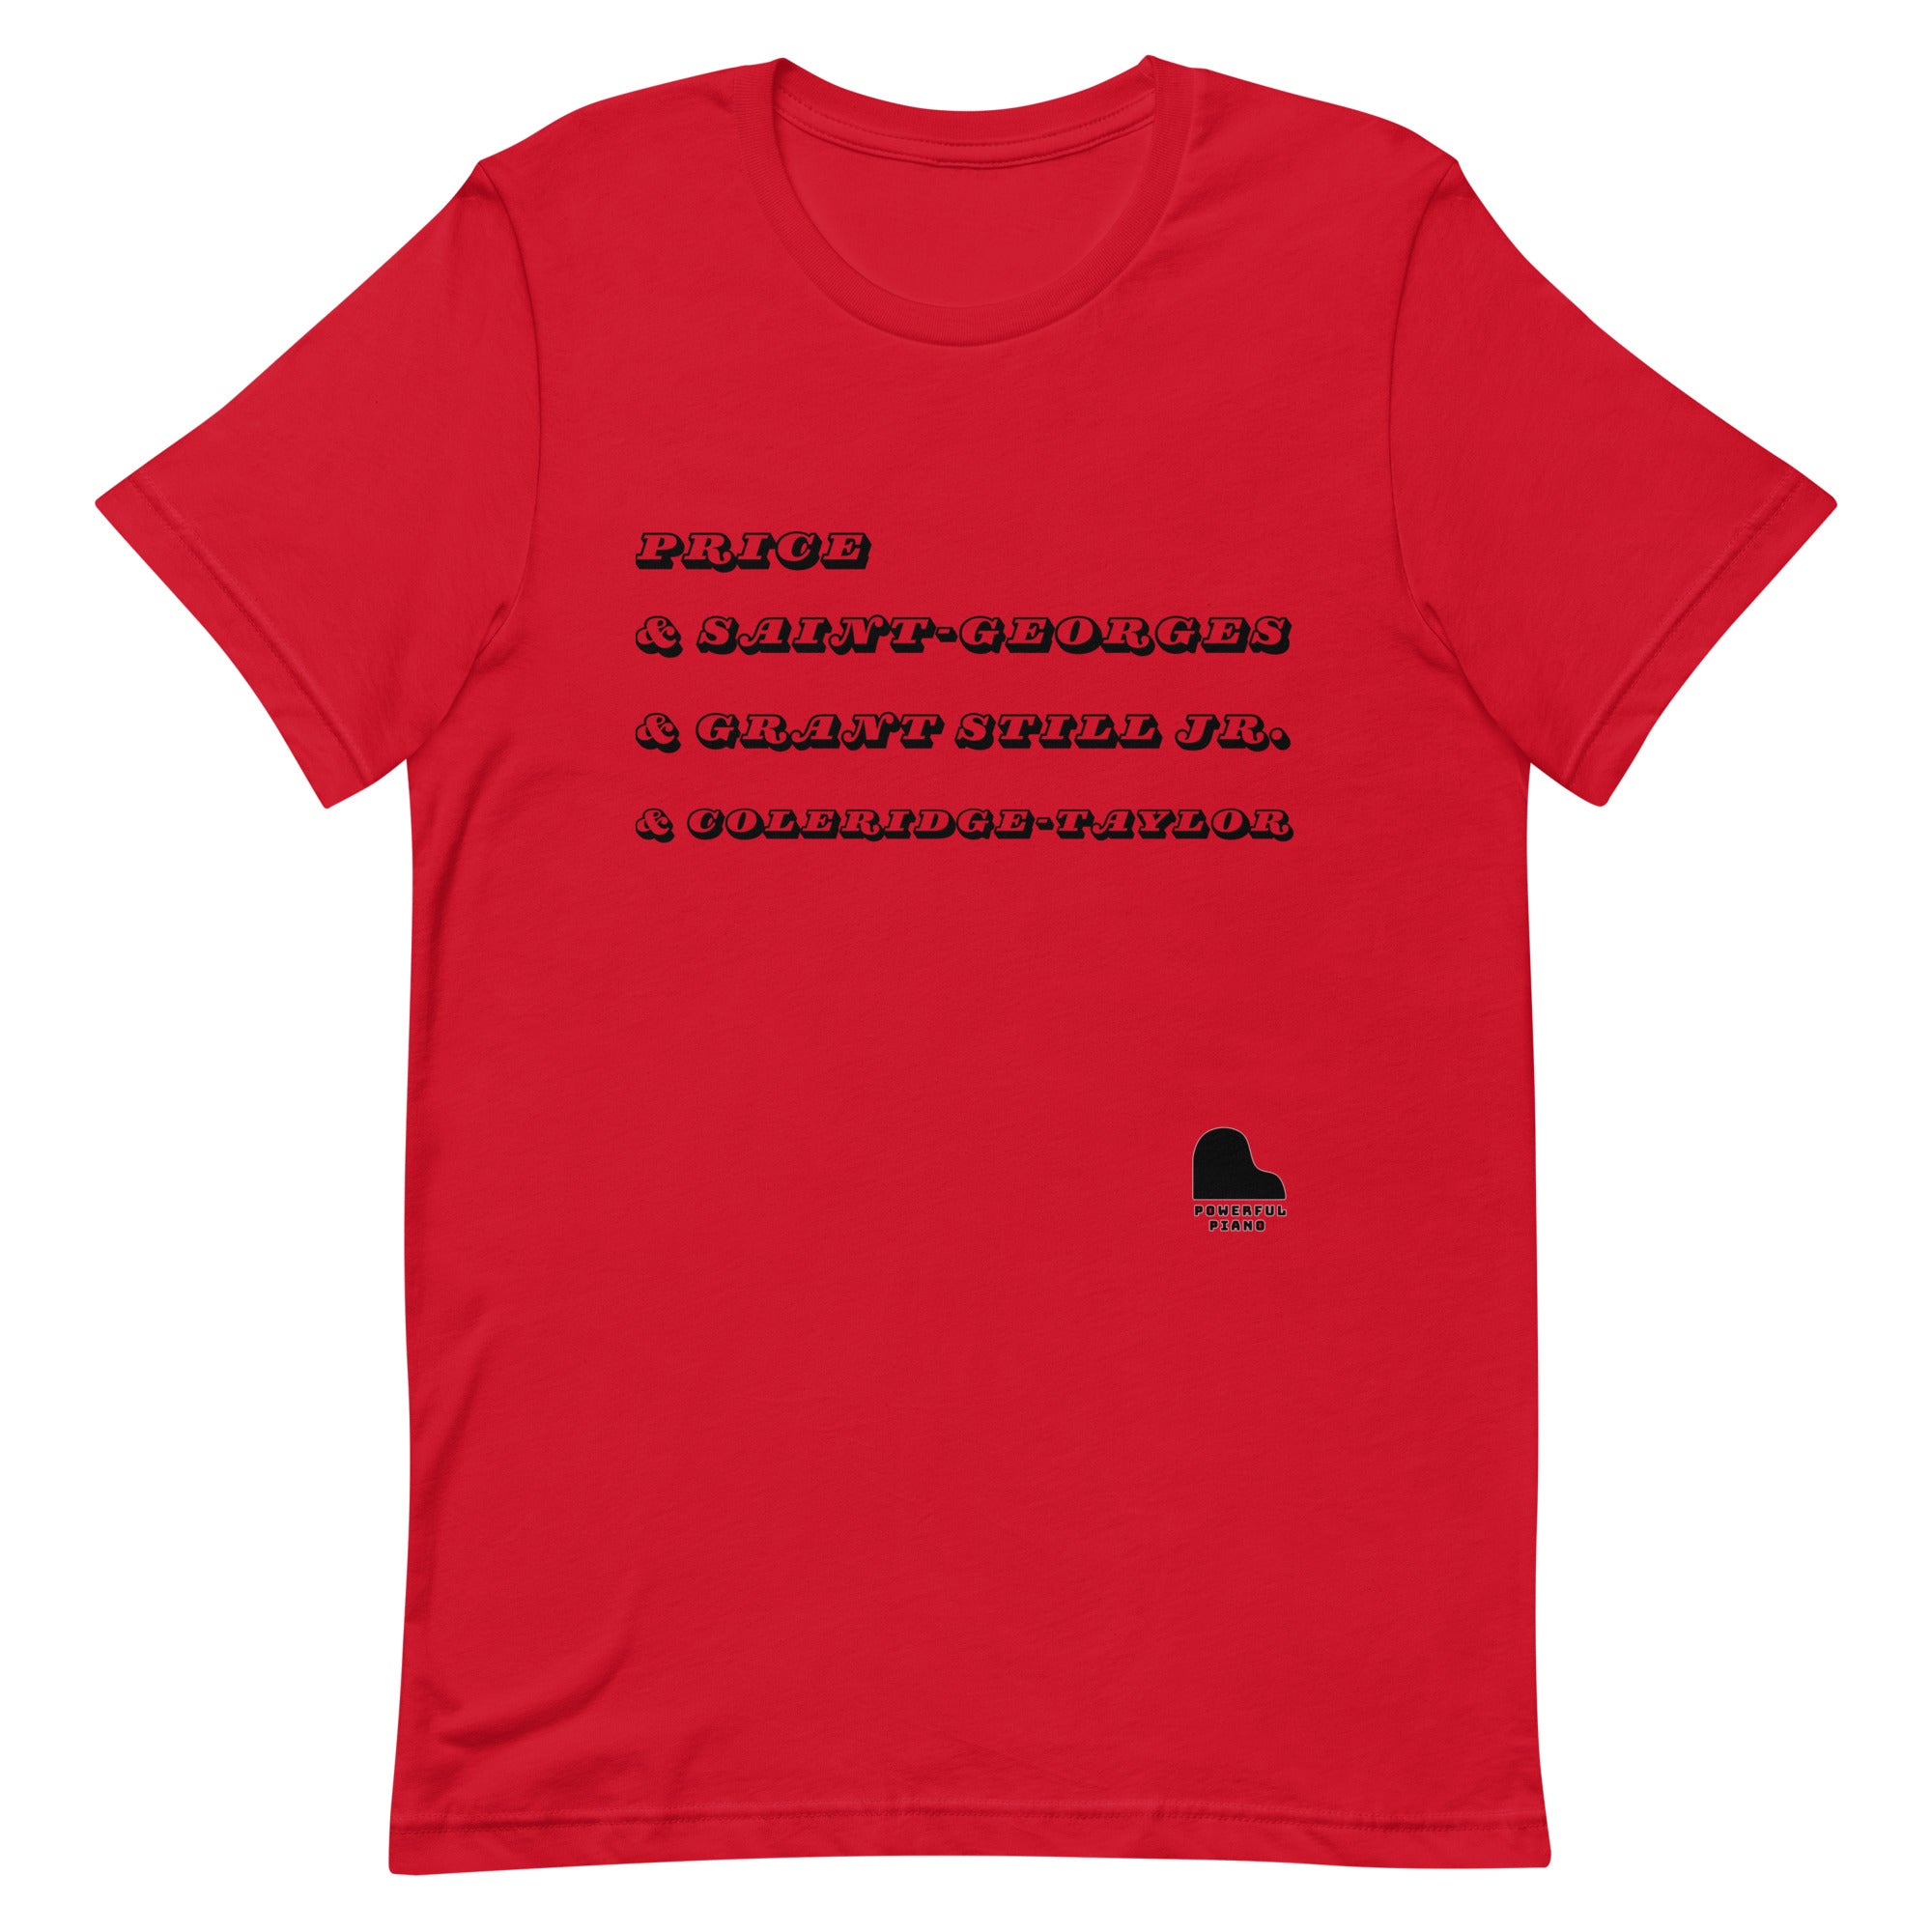 Composer Roll Call T-Shirt